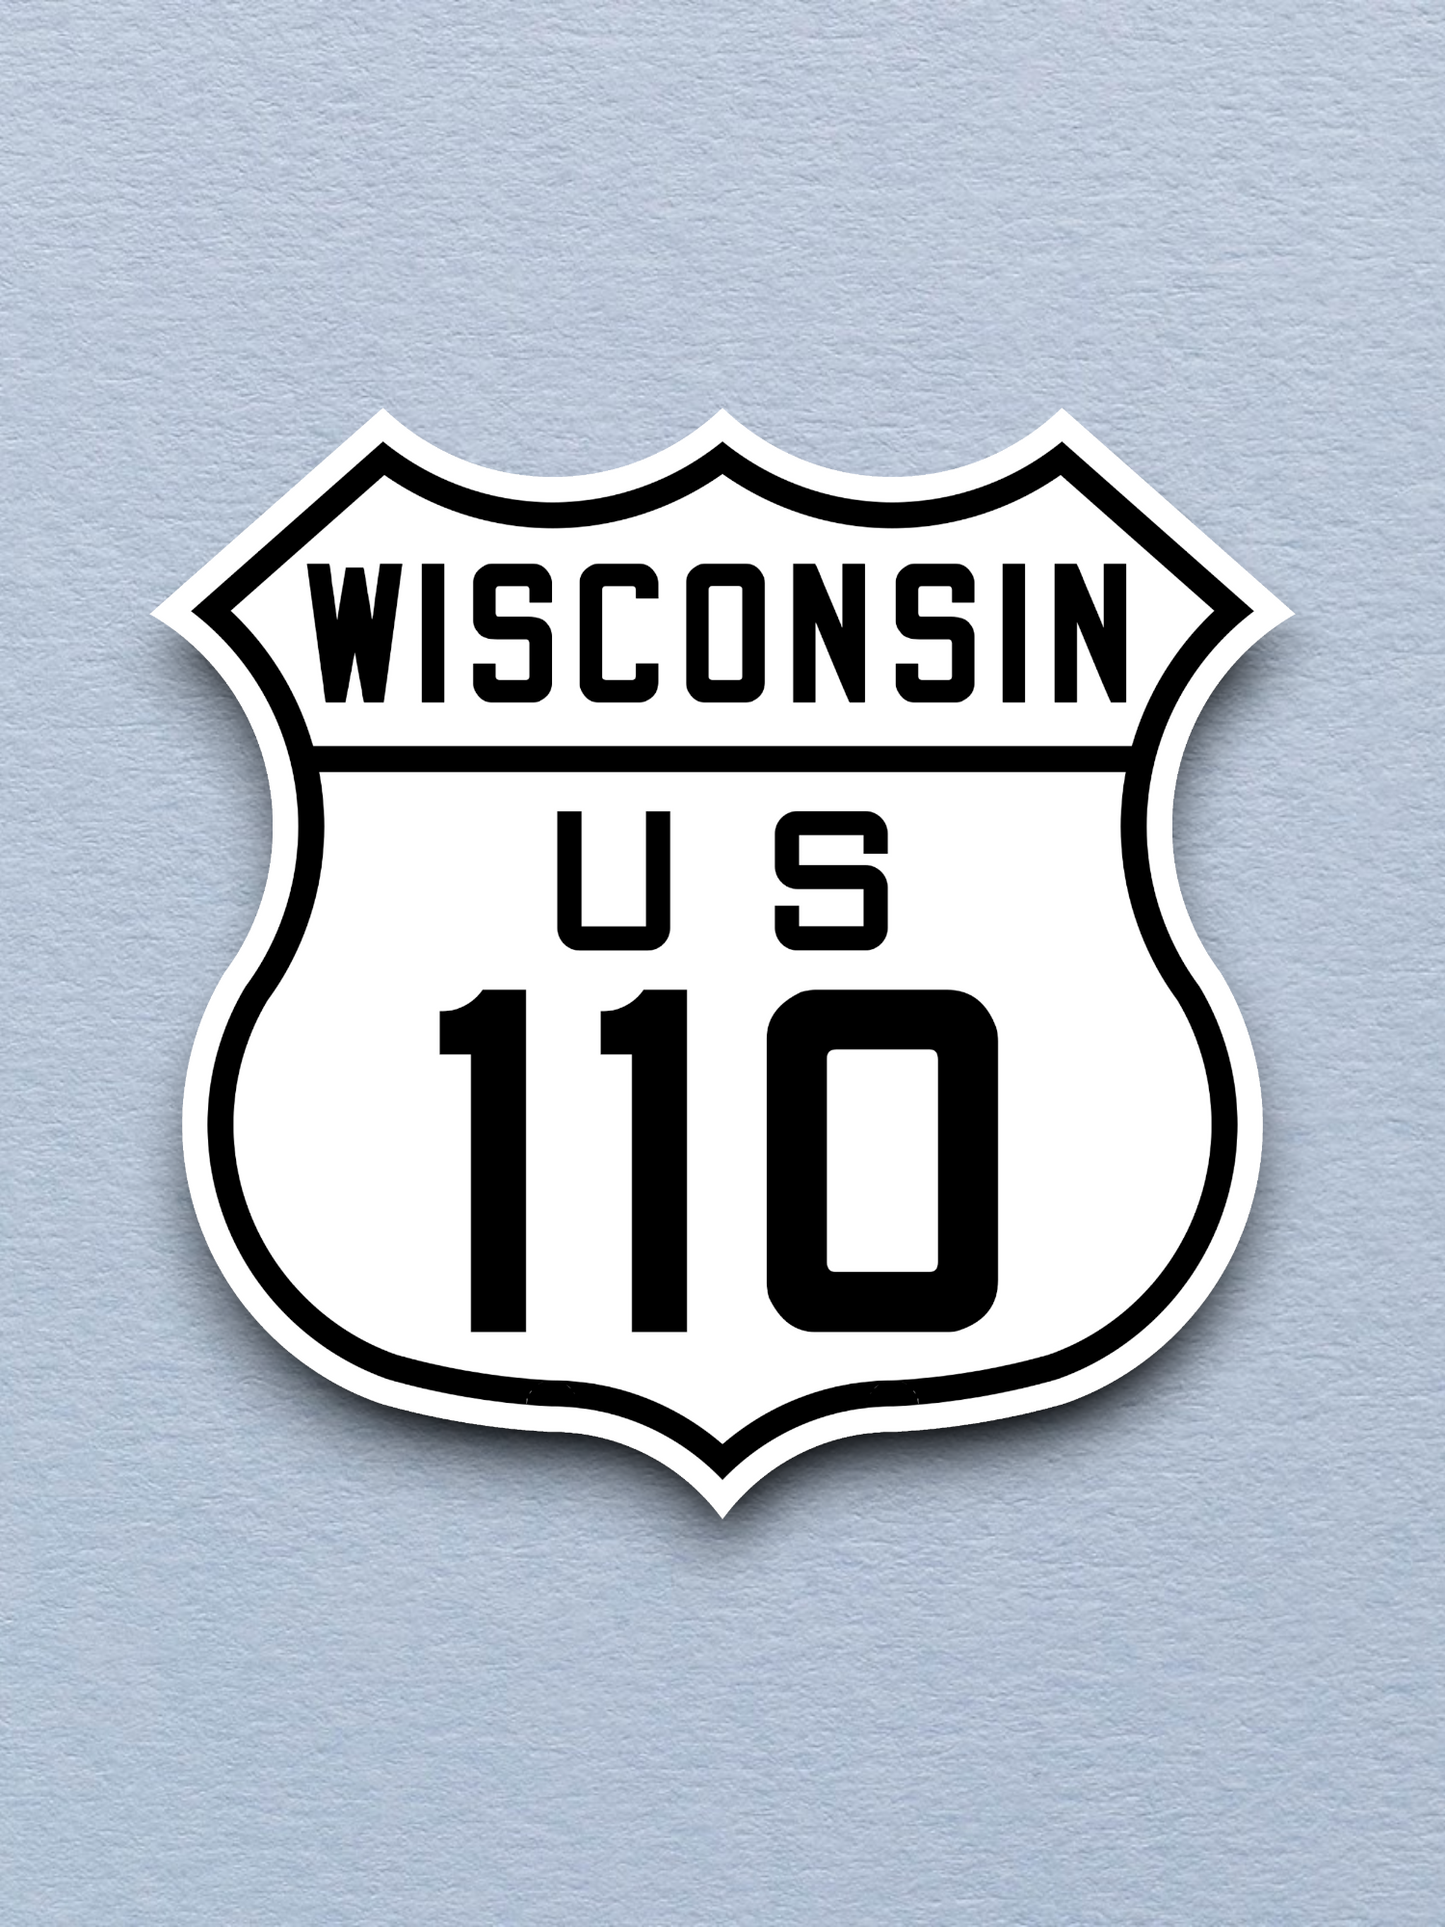 U.S. Route 110 Wisconsin Road Sign Sticker